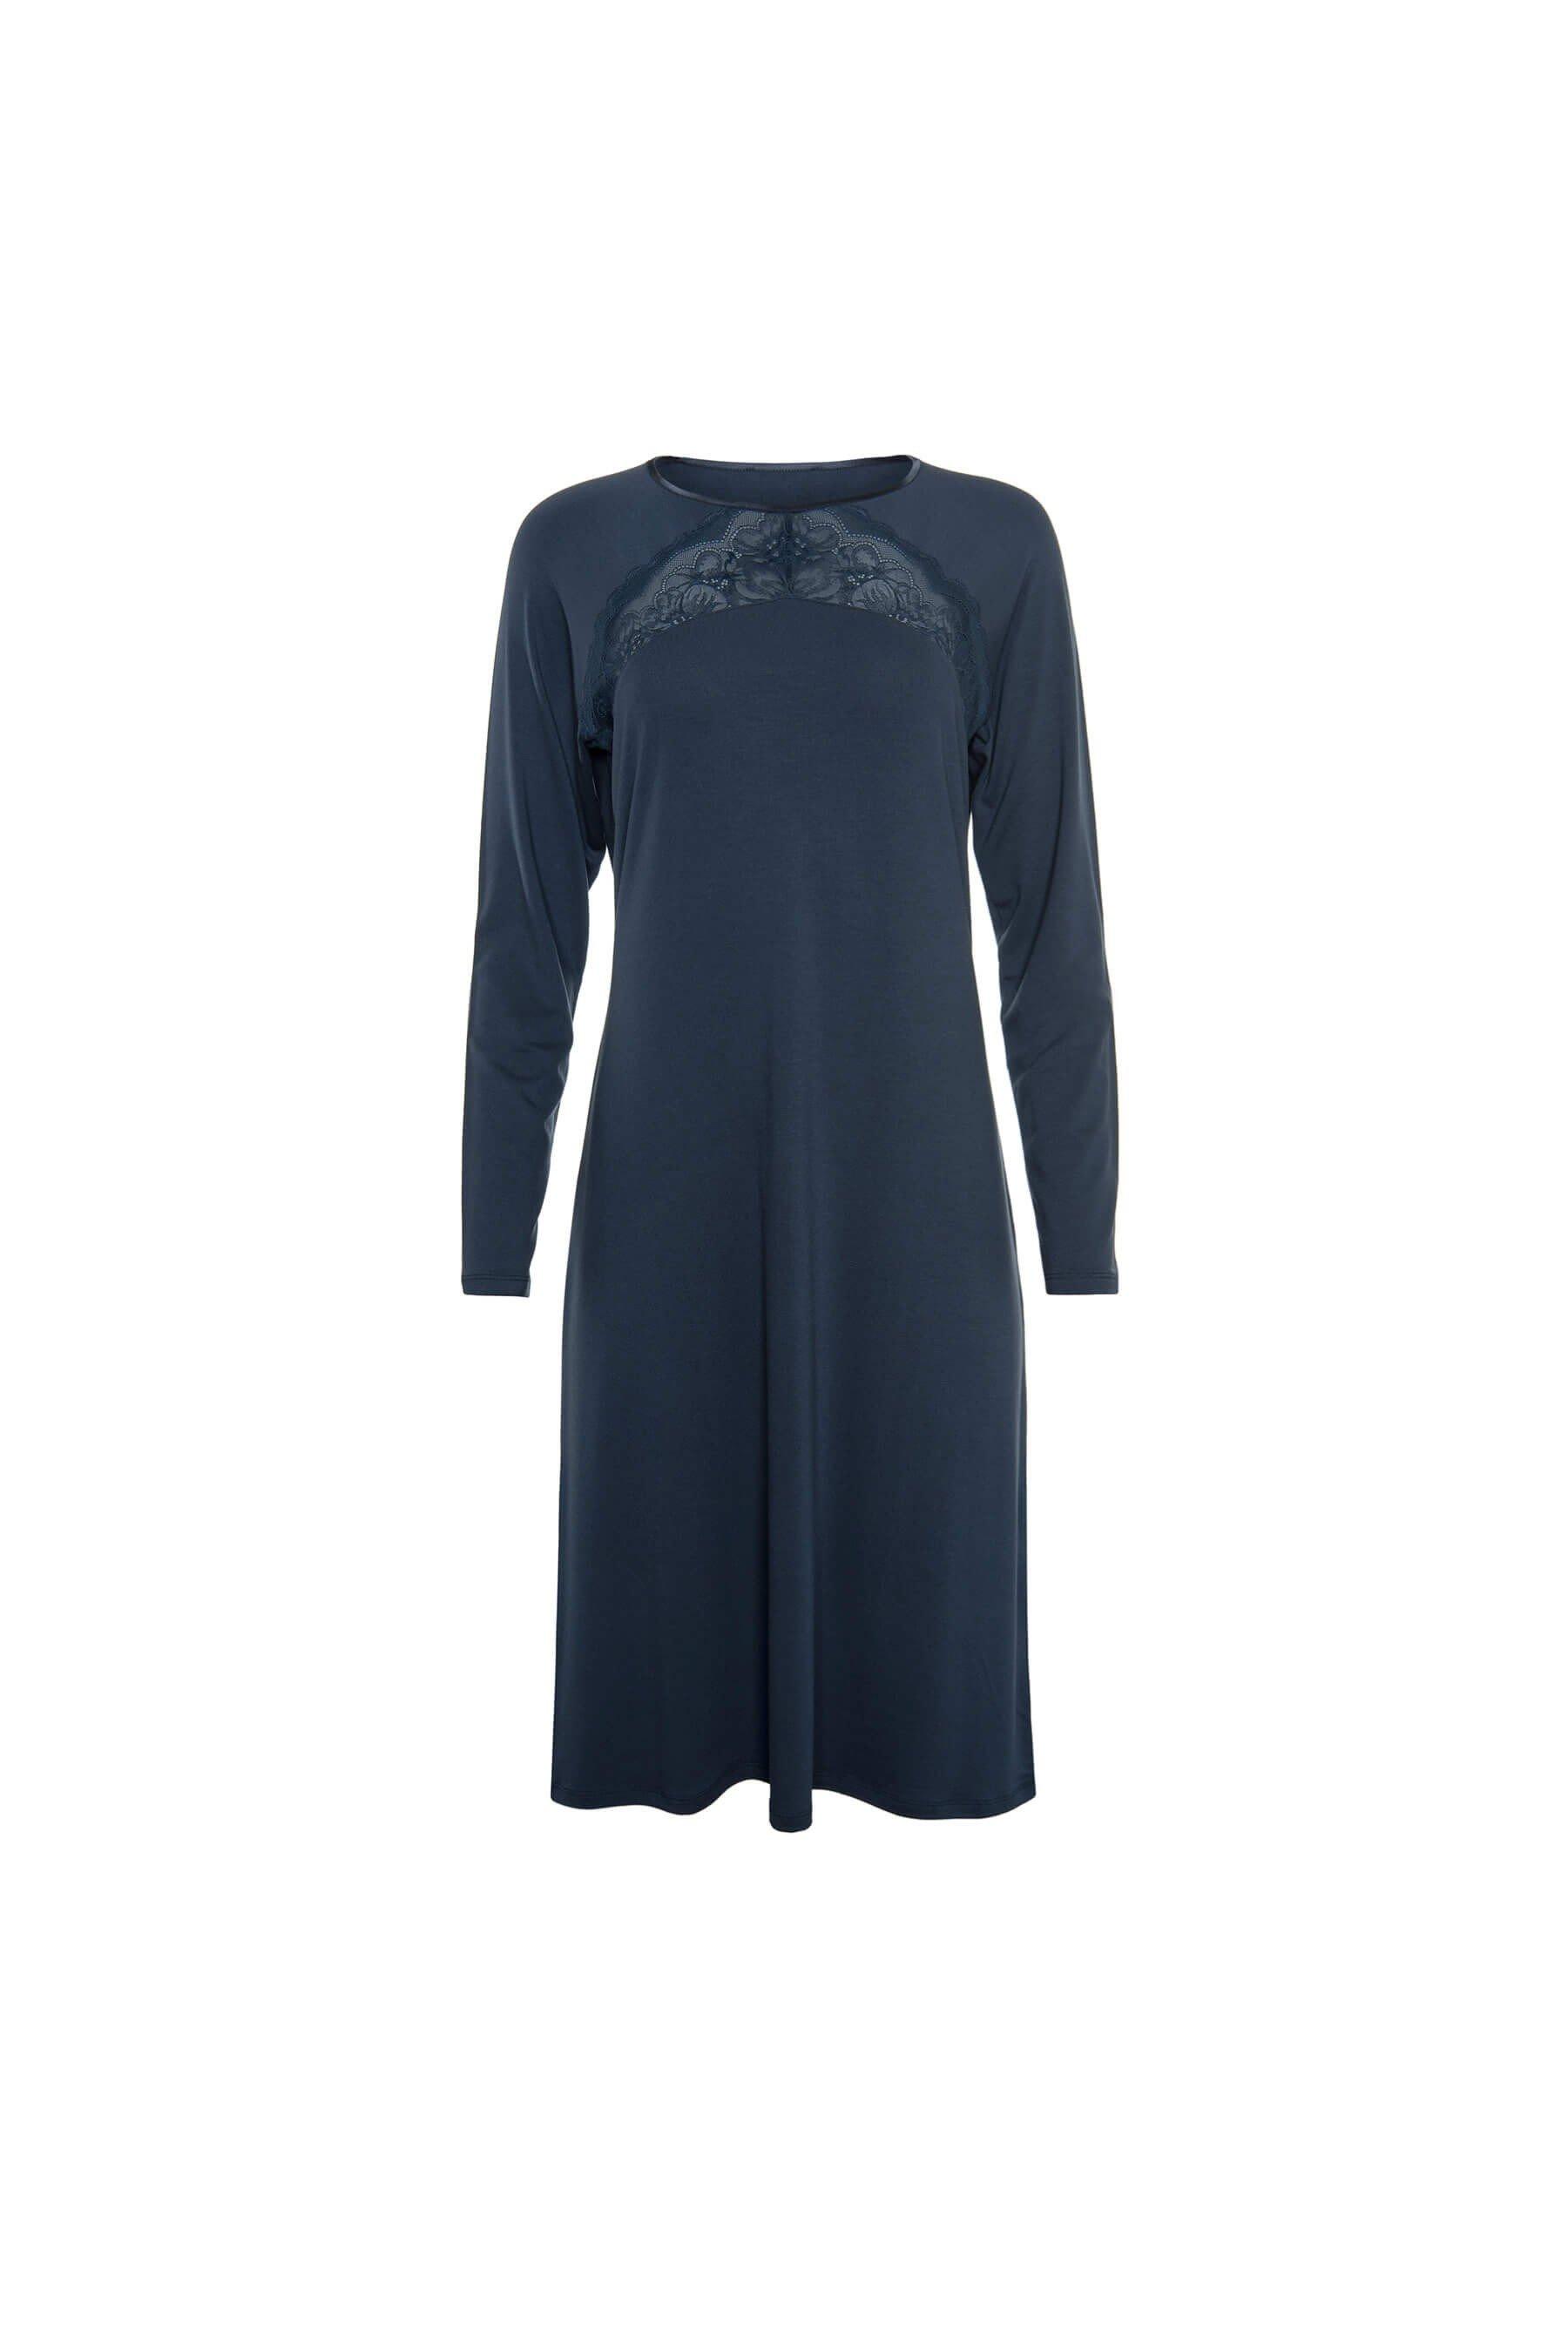 'Evelyn' Long Sleeve Modal Nightdress